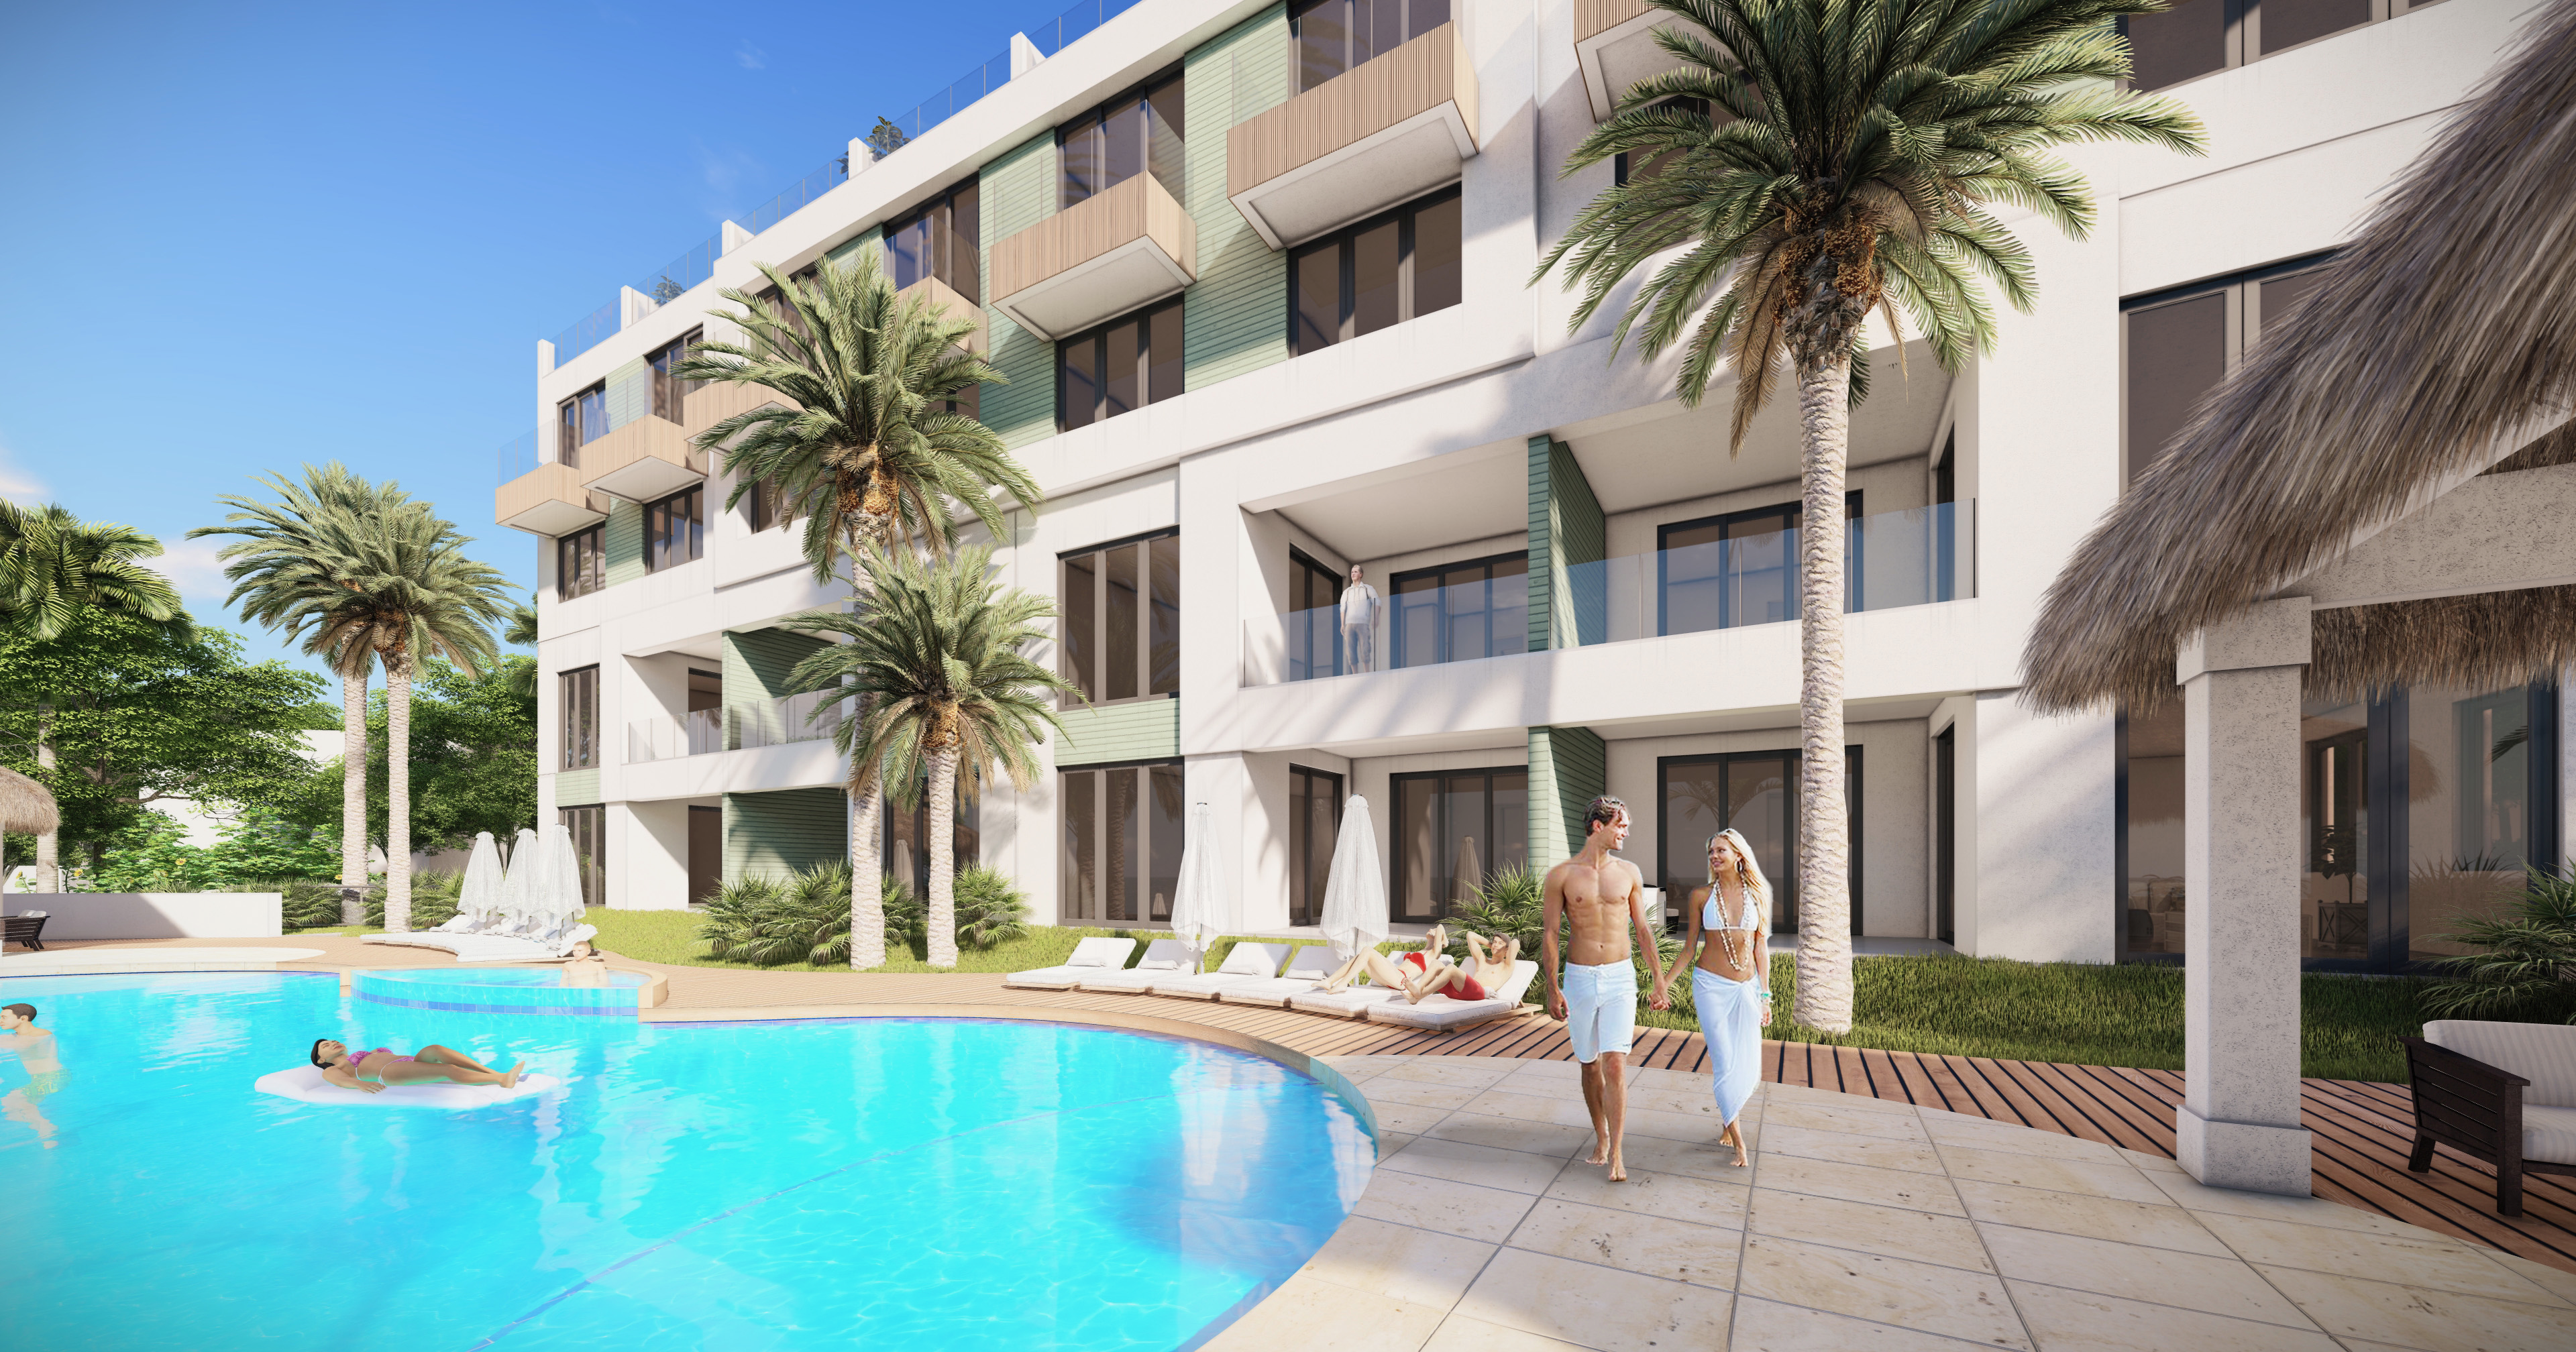 Cayman’s residential property market reaps rewards for international investors